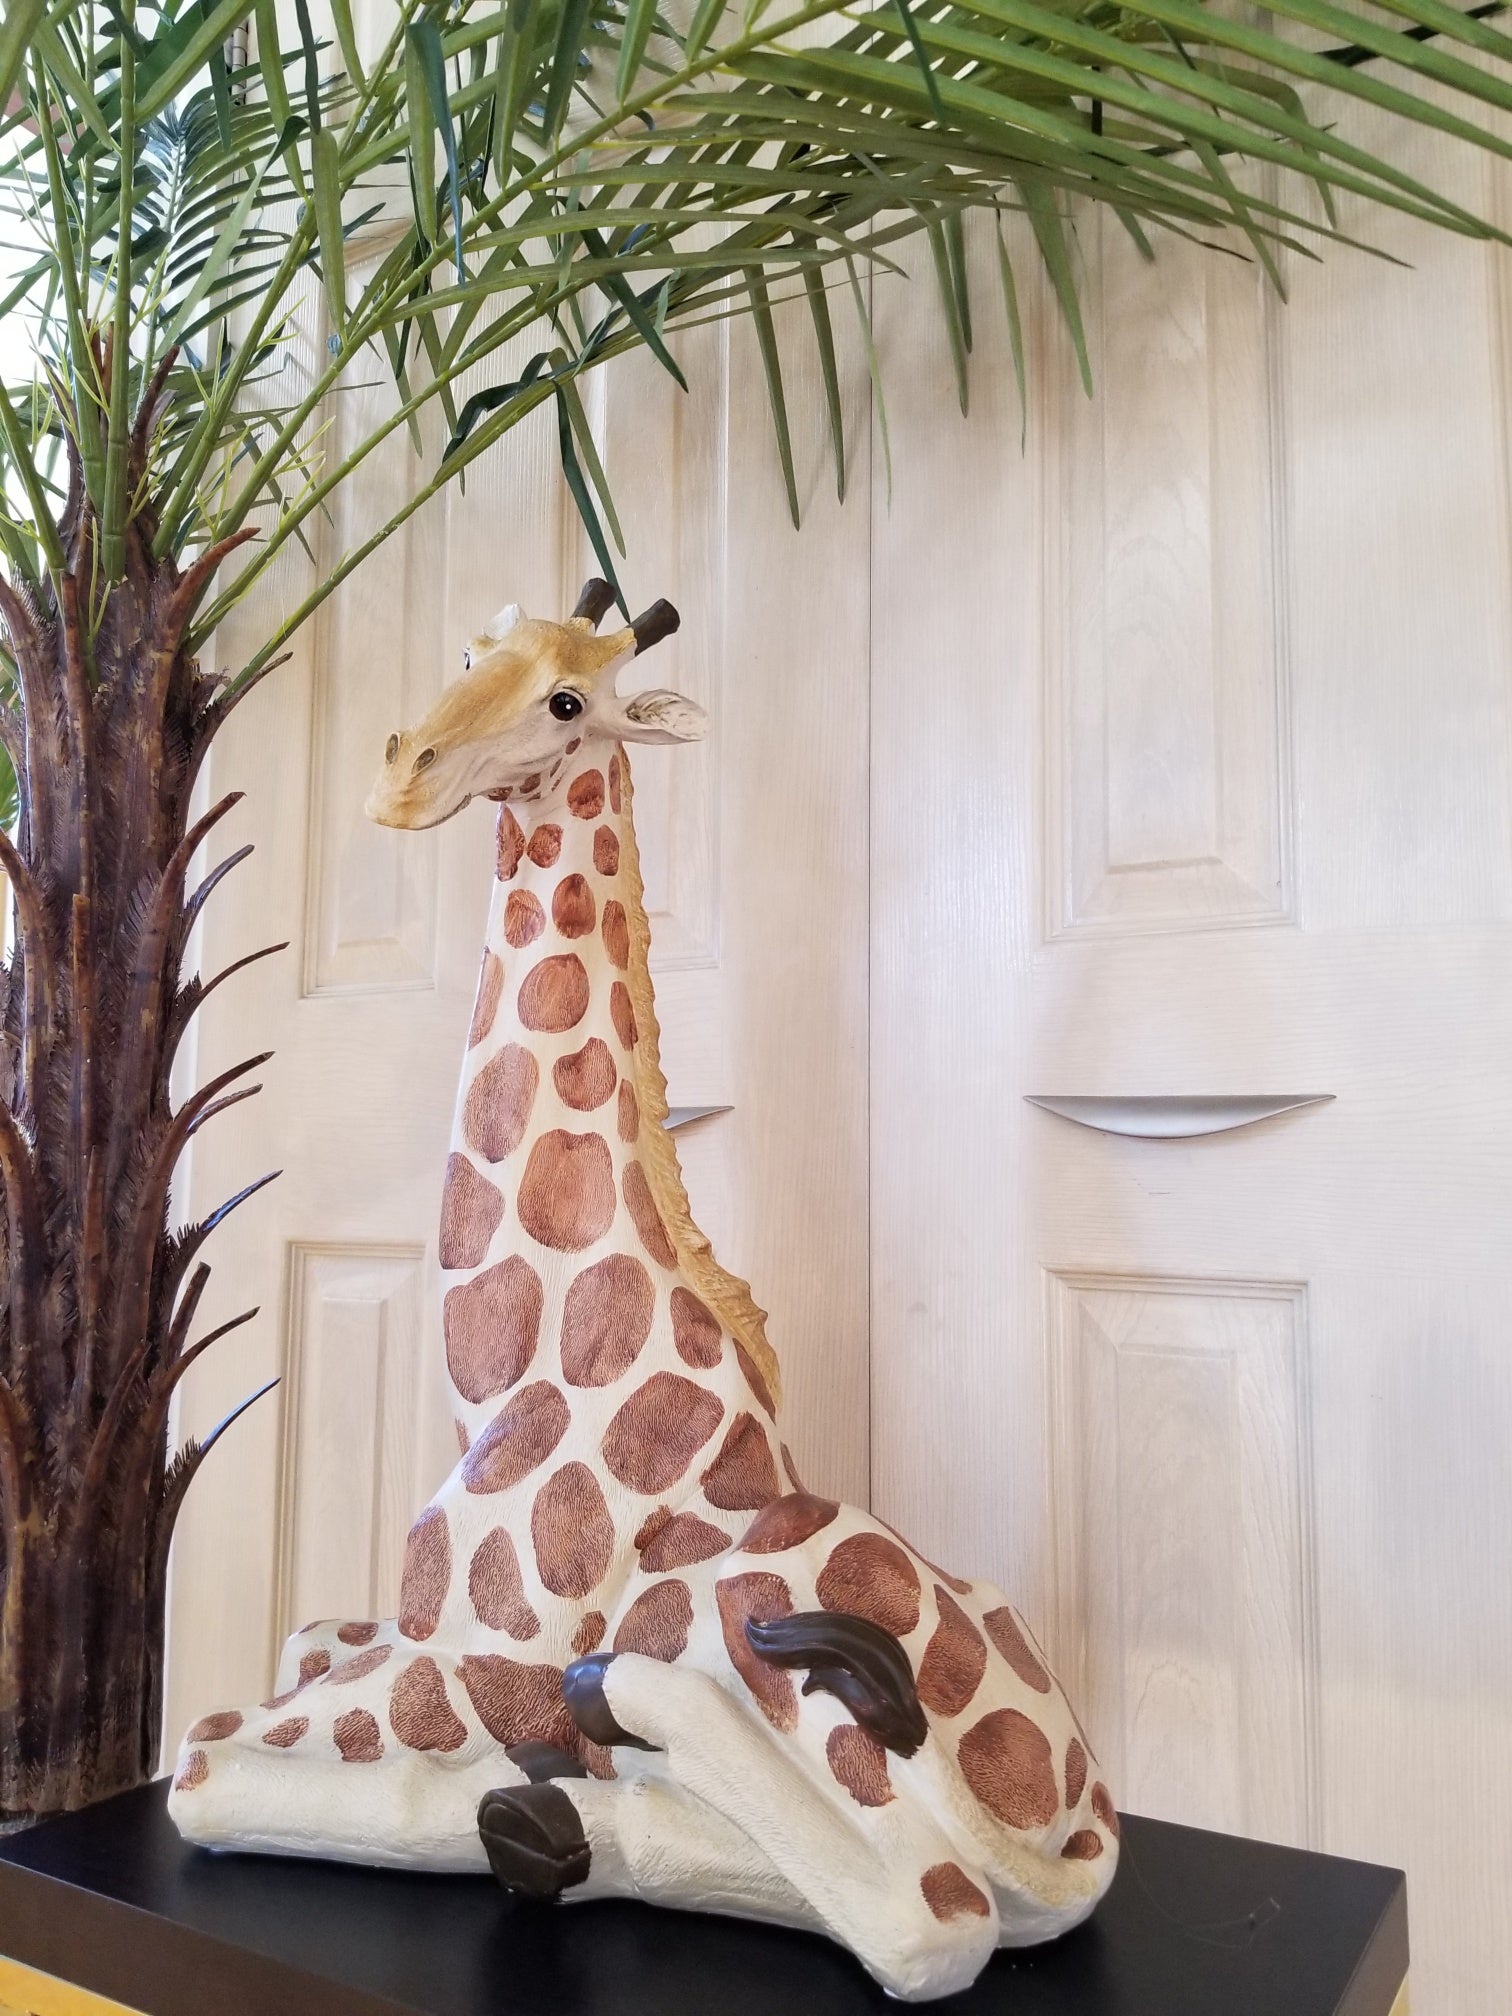 resting giraffe statue for sale